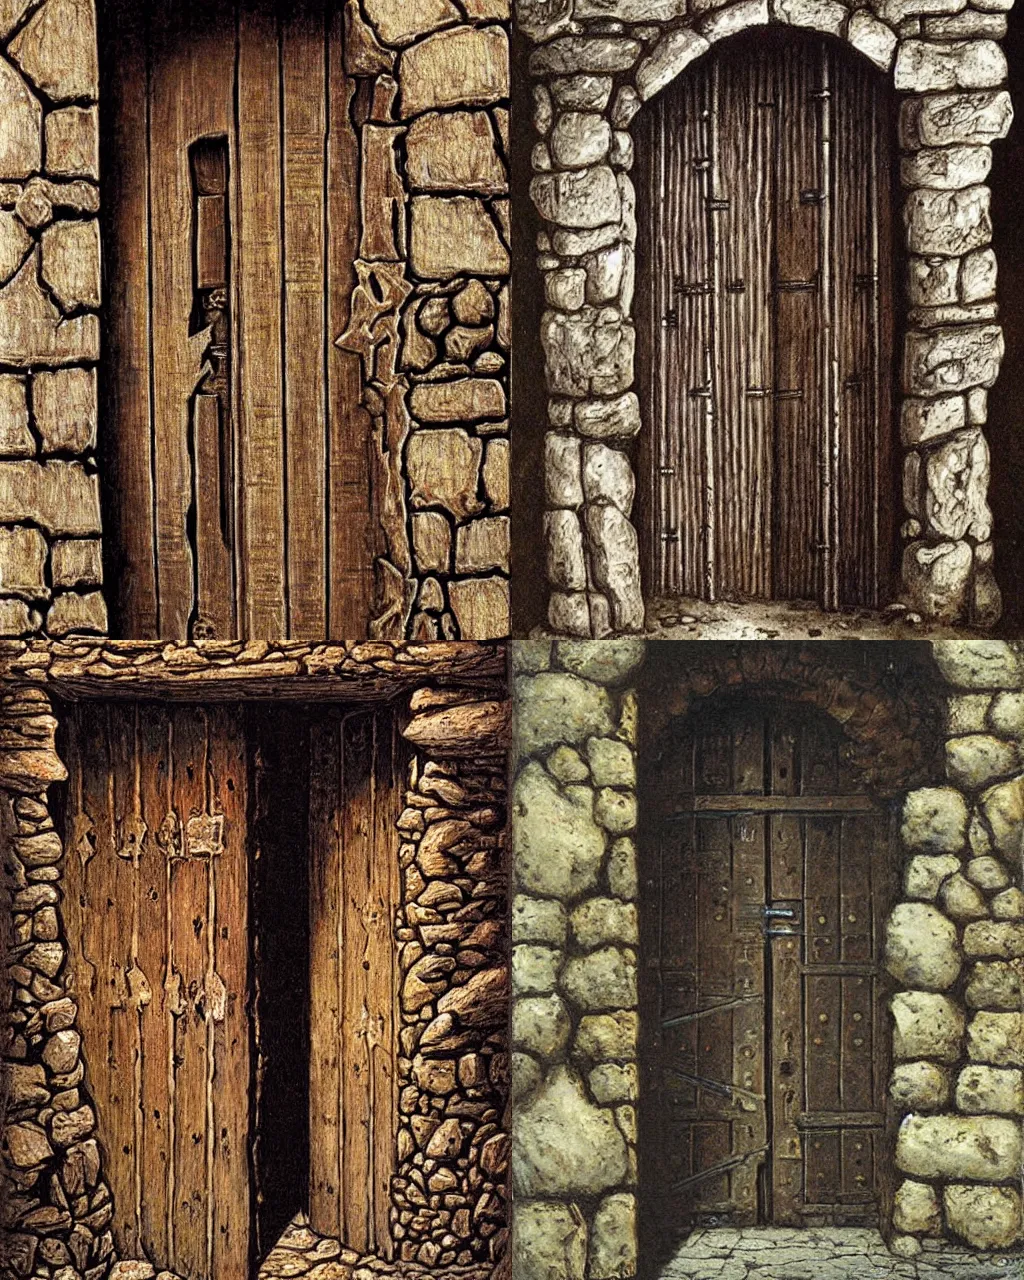 Prompt: Old wooden door in a dungeon, rocks and metal, jeff easley,